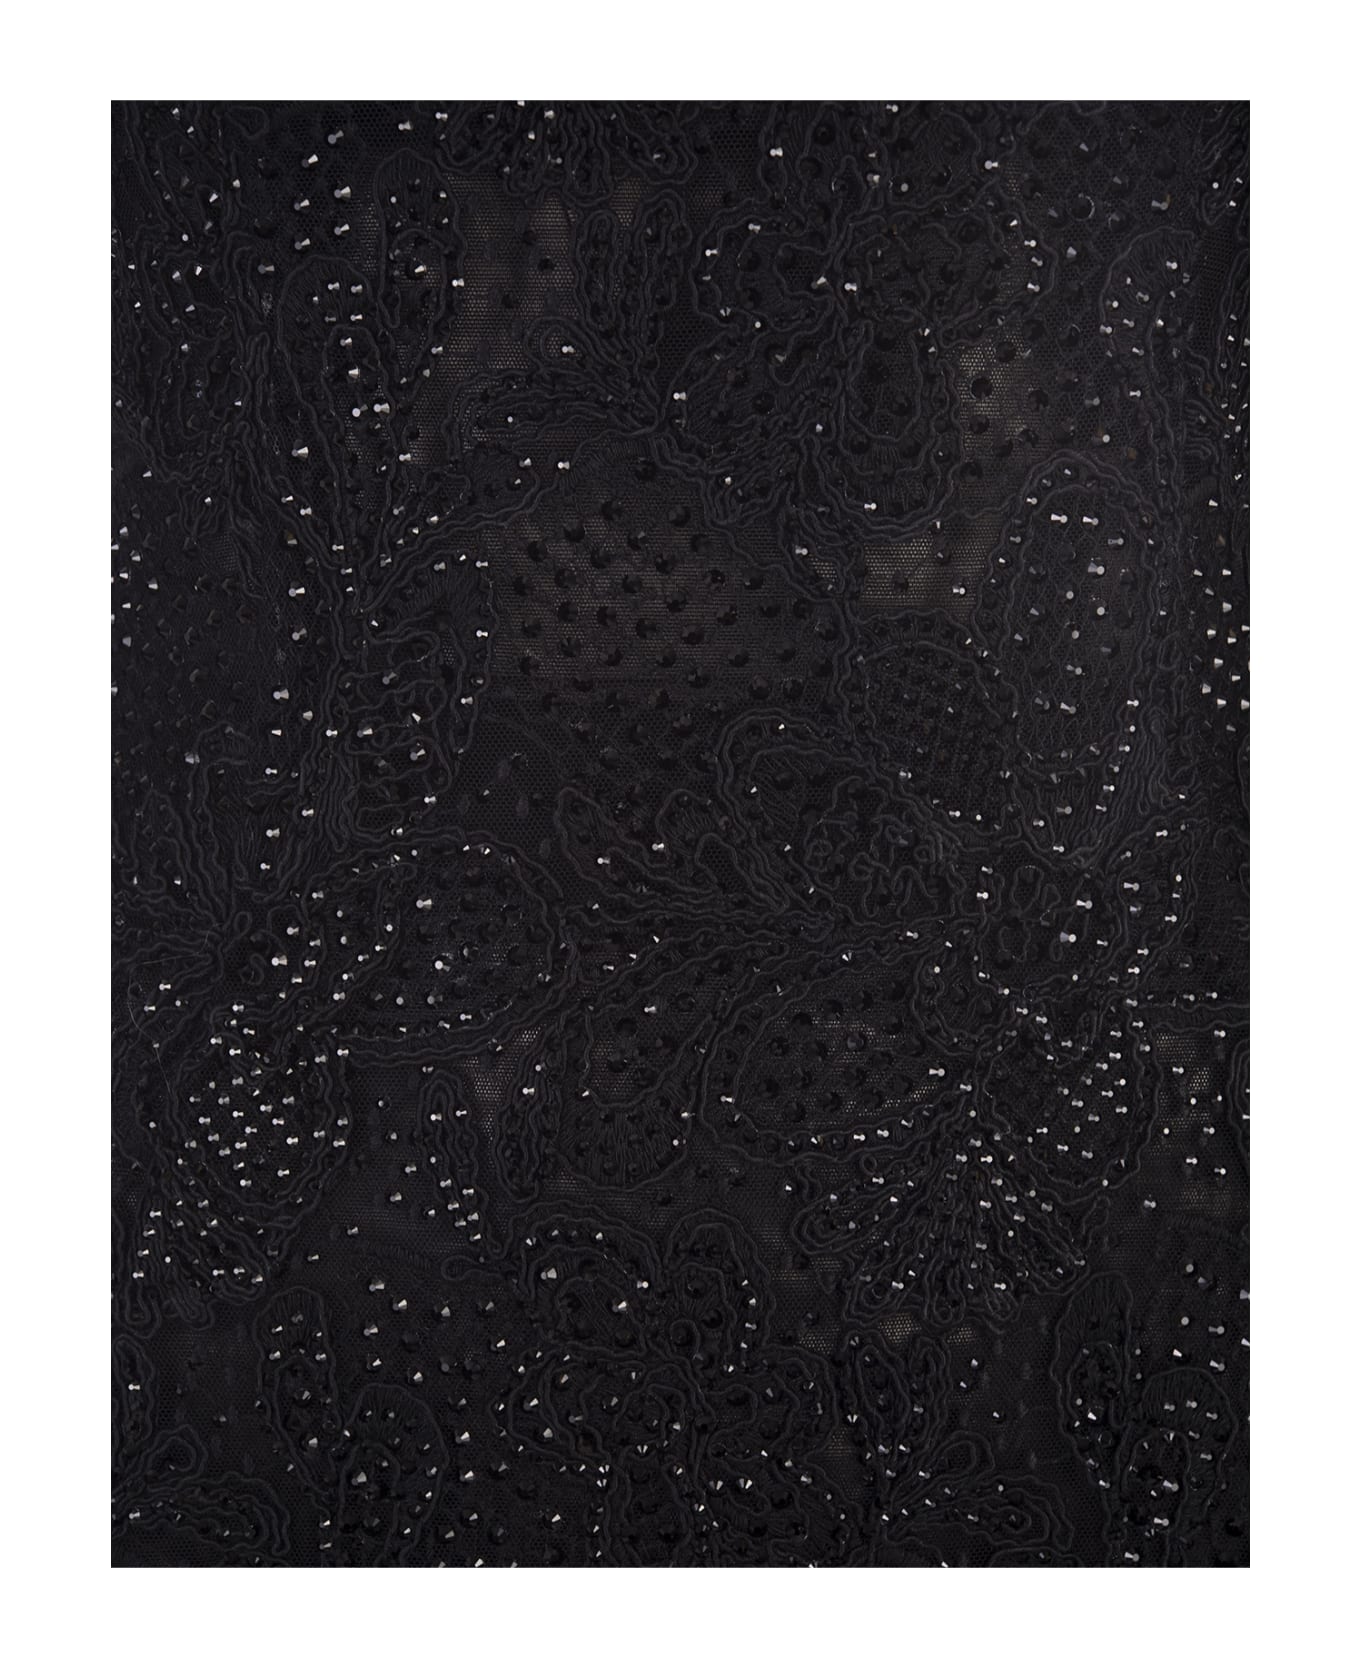 Ermanno Scervino Midi Dress In Black Lace With Crystals - Black